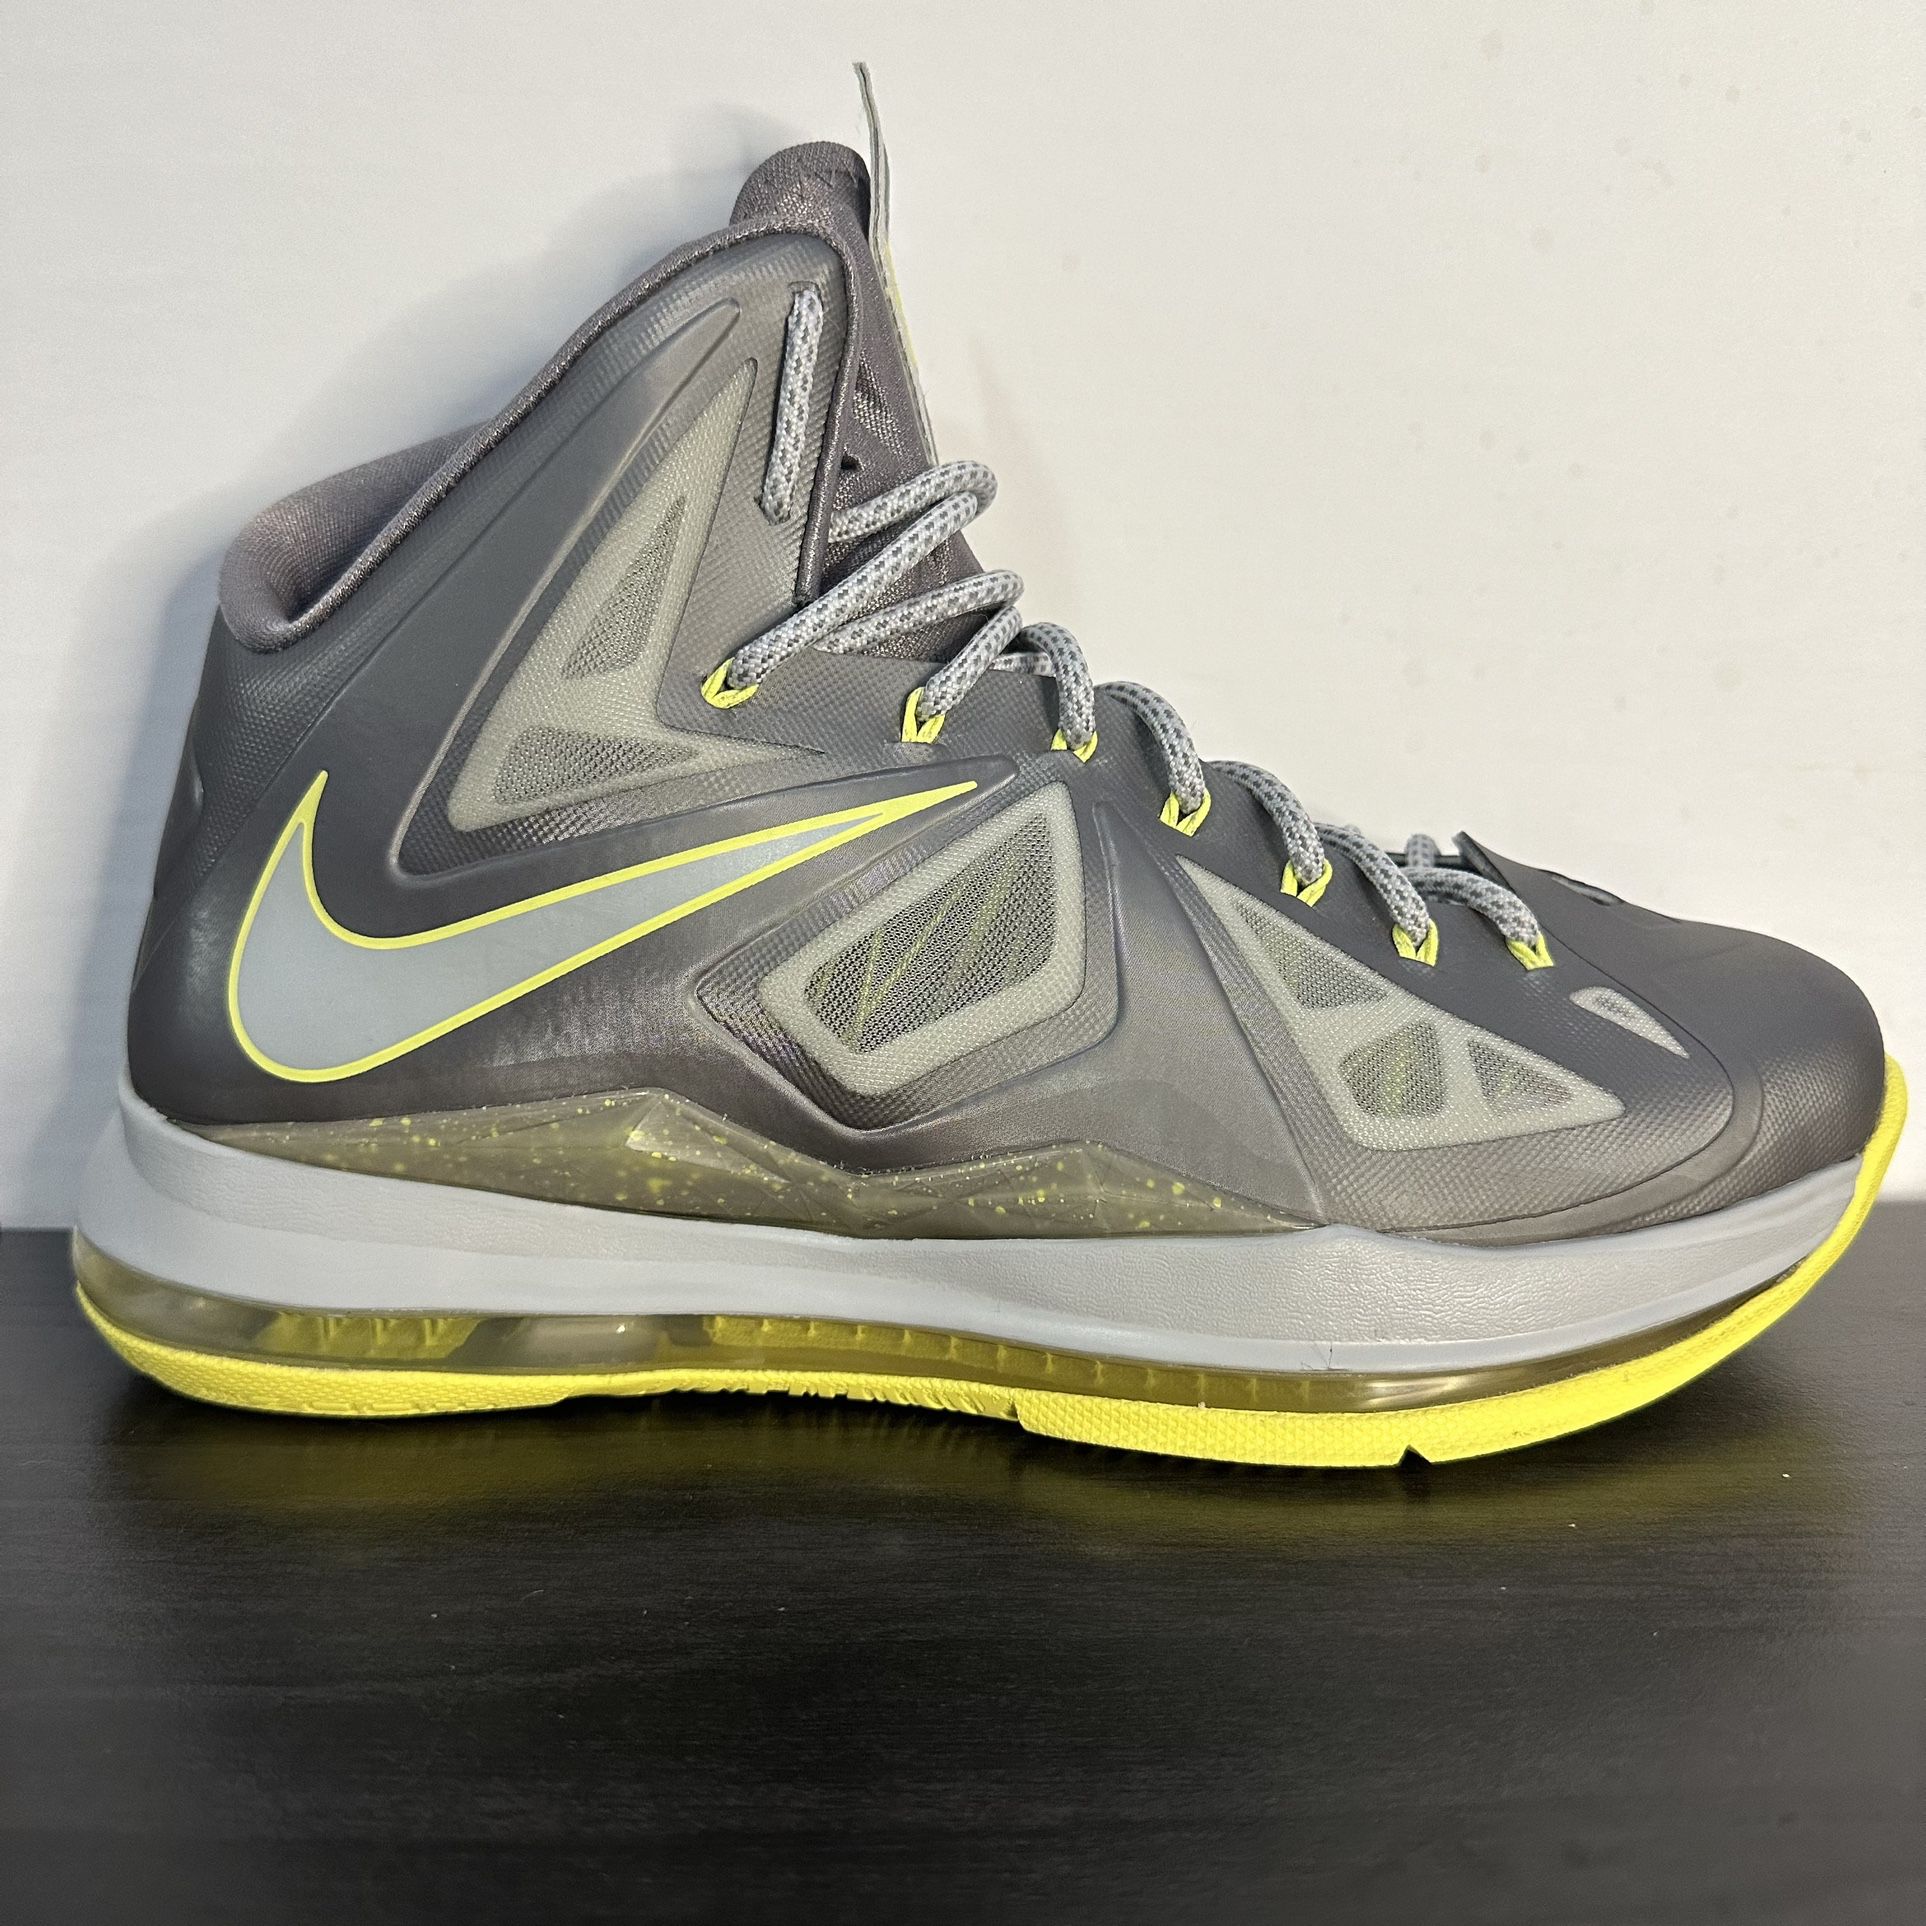 Nike Lebron 10 Yellow Diamond Canary Size 9.5 Gray Basketball Shoes